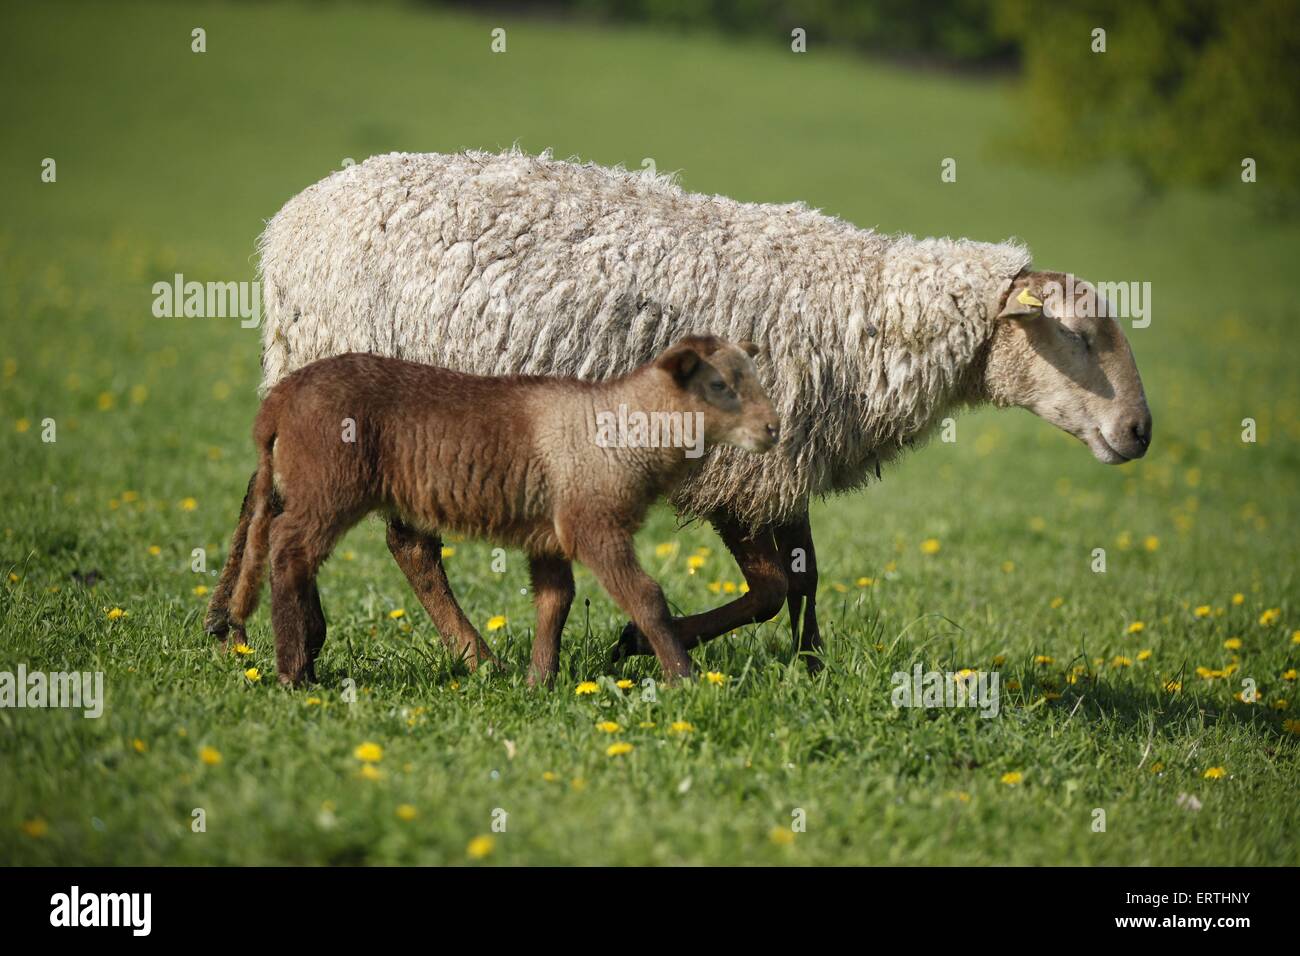 sheep with lamb Stock Photo